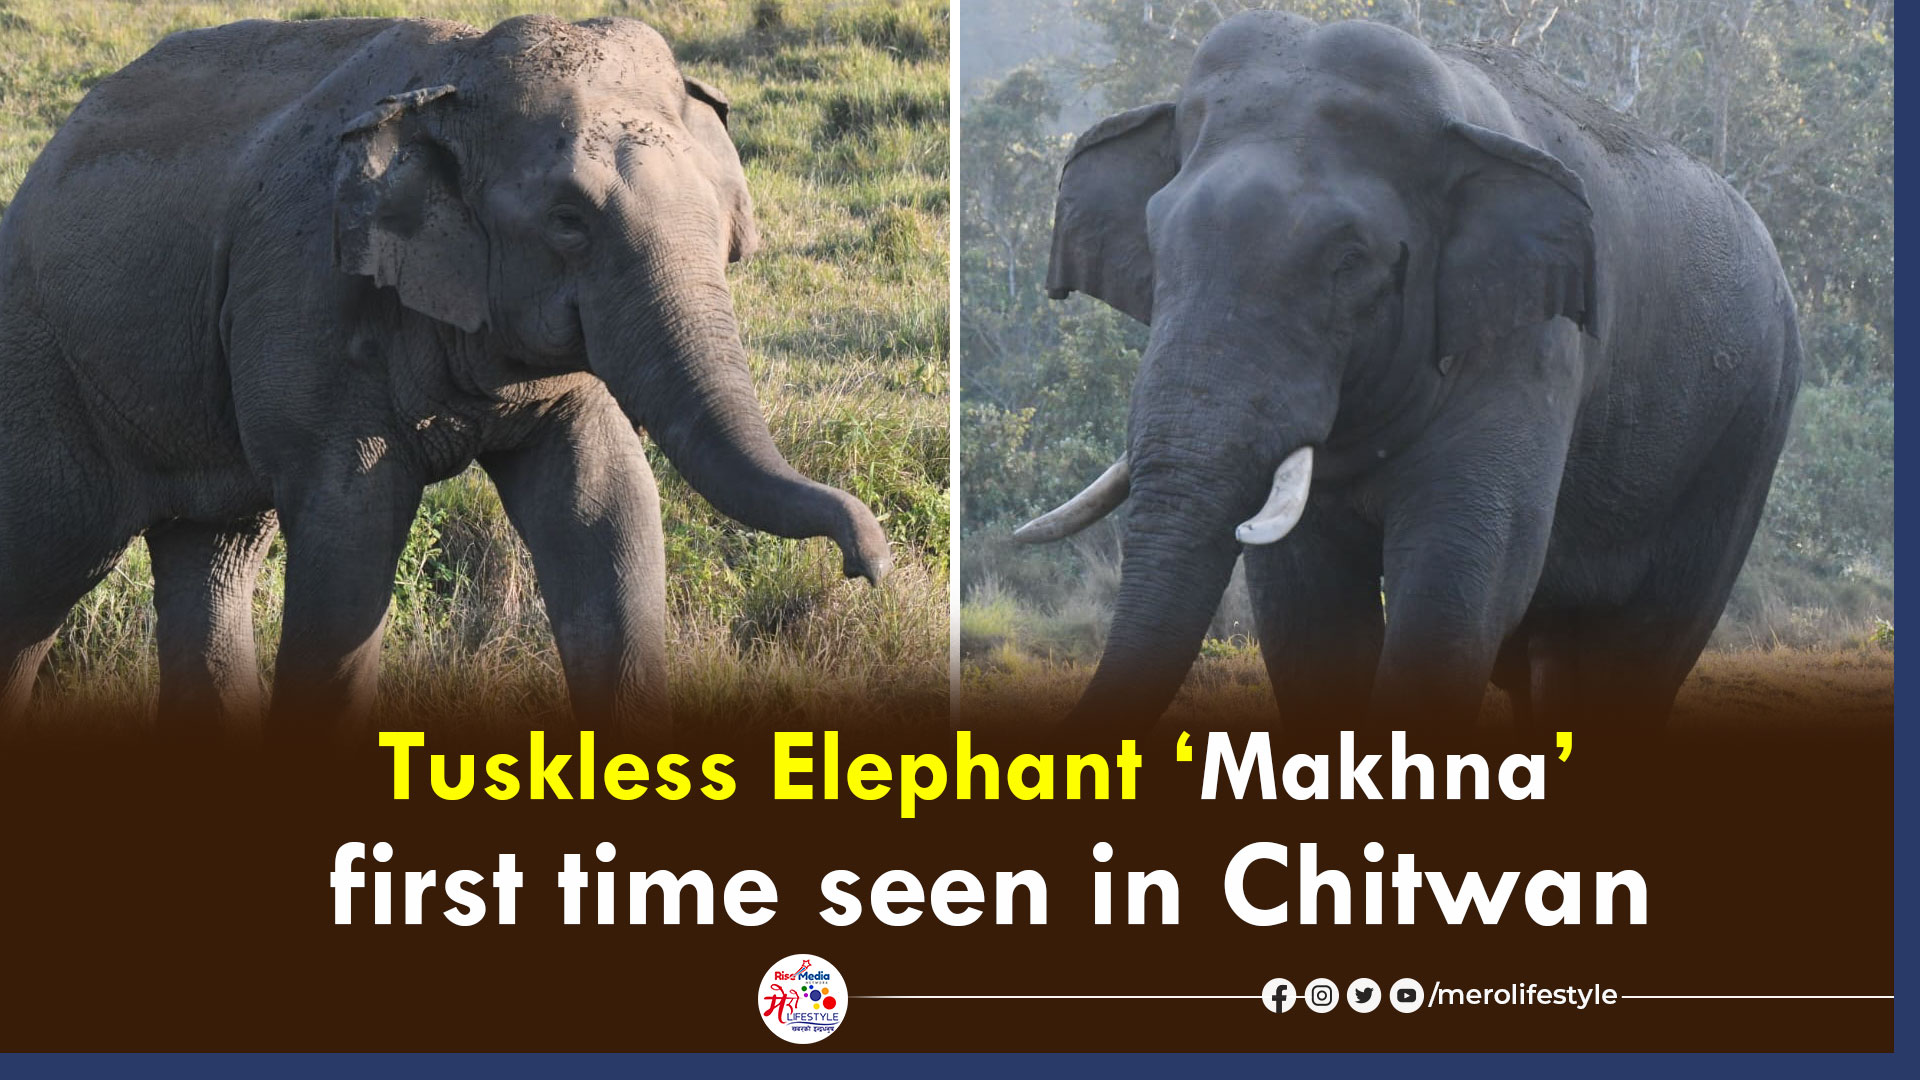 Tuskless elephant Makhna first time seen in Chitwan